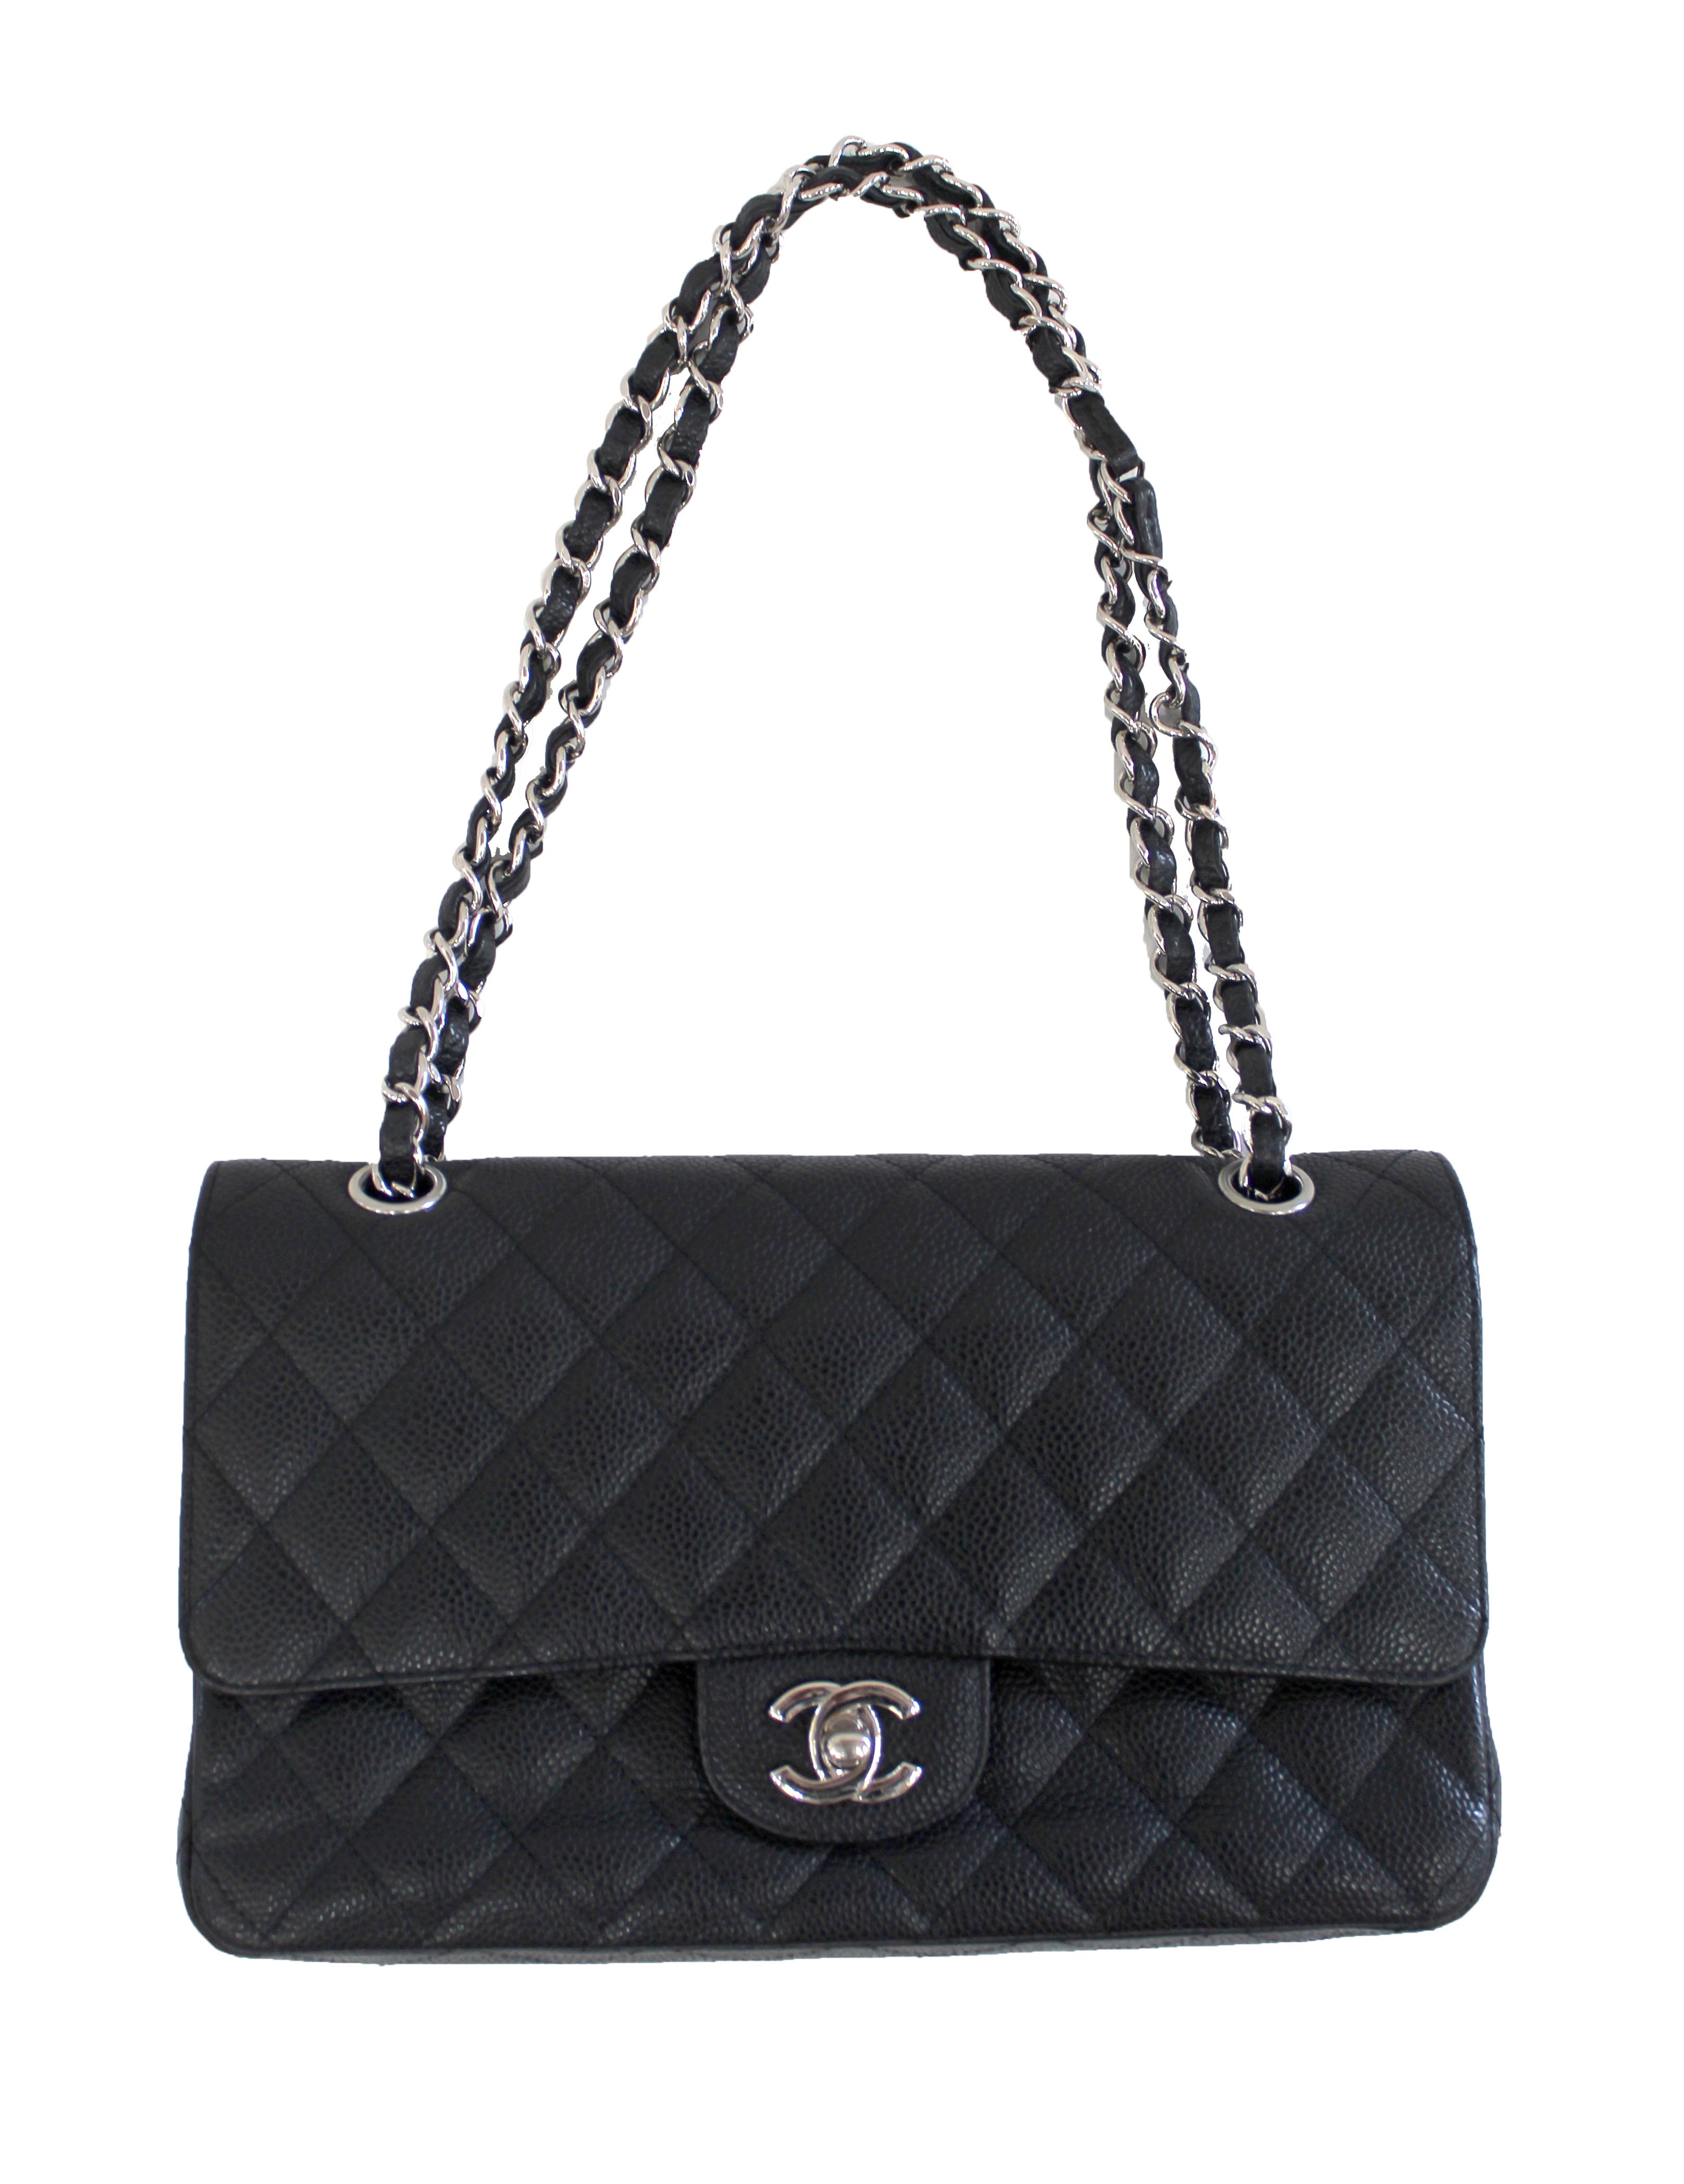 Authentic Chanel Classic Black Caviar Leather Medium Double Flap bag